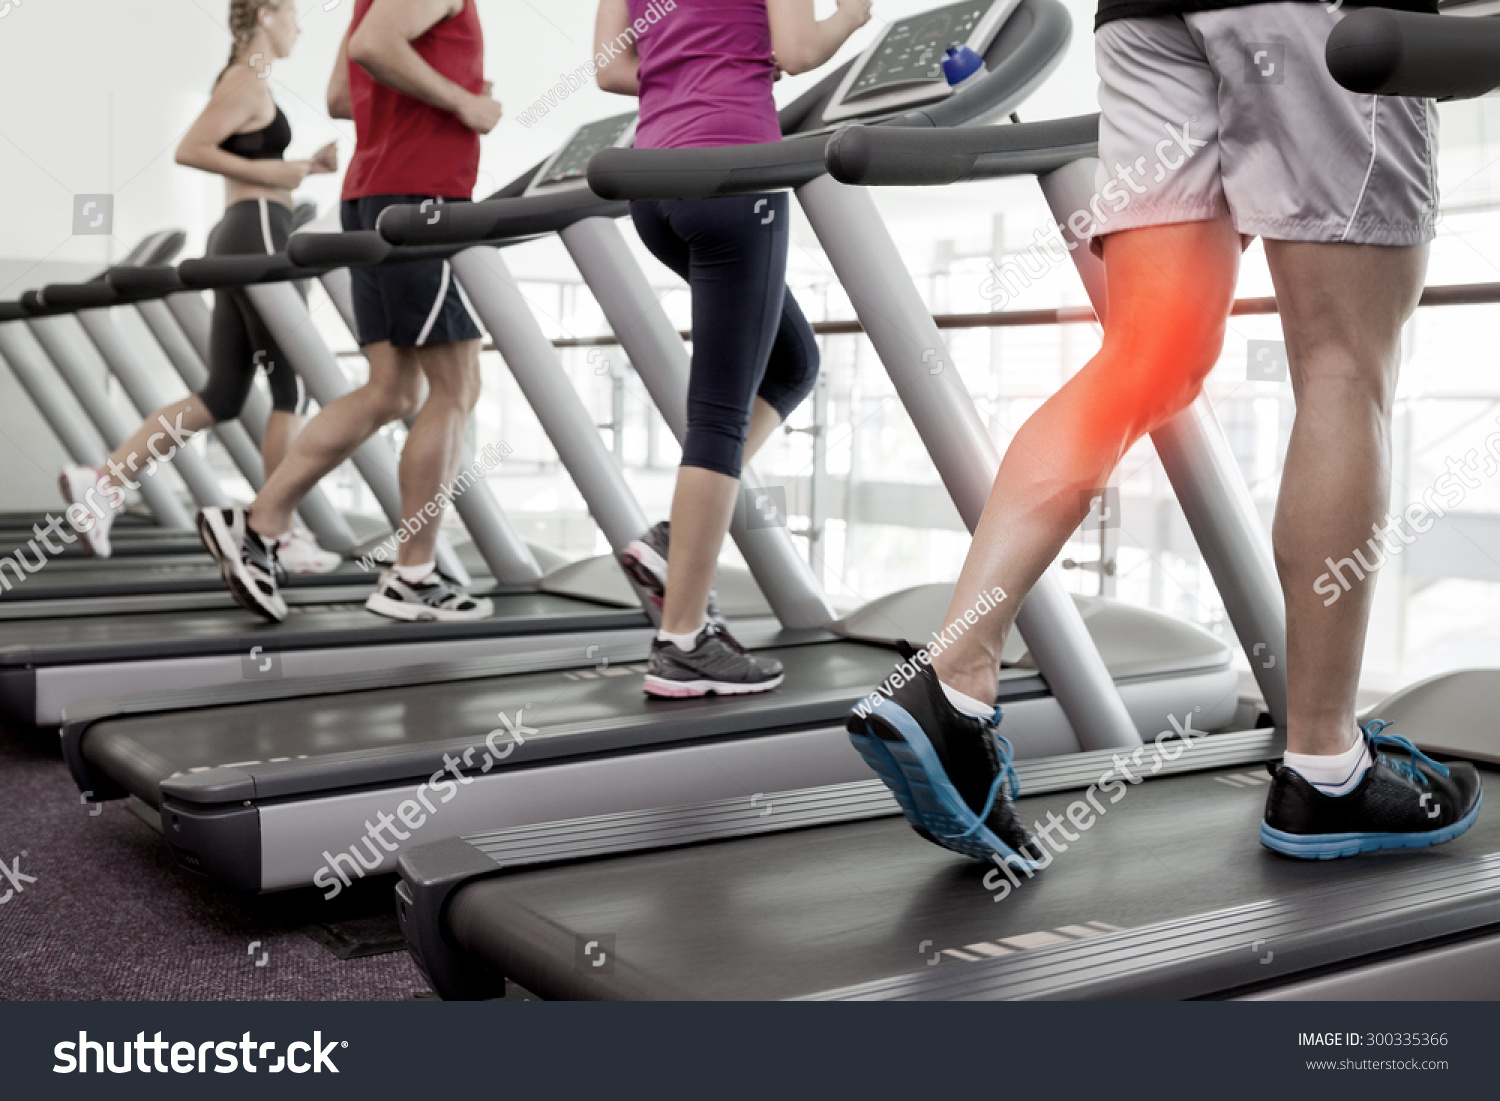 Digital composite of Highlighted knee of man on treadmill #300335366